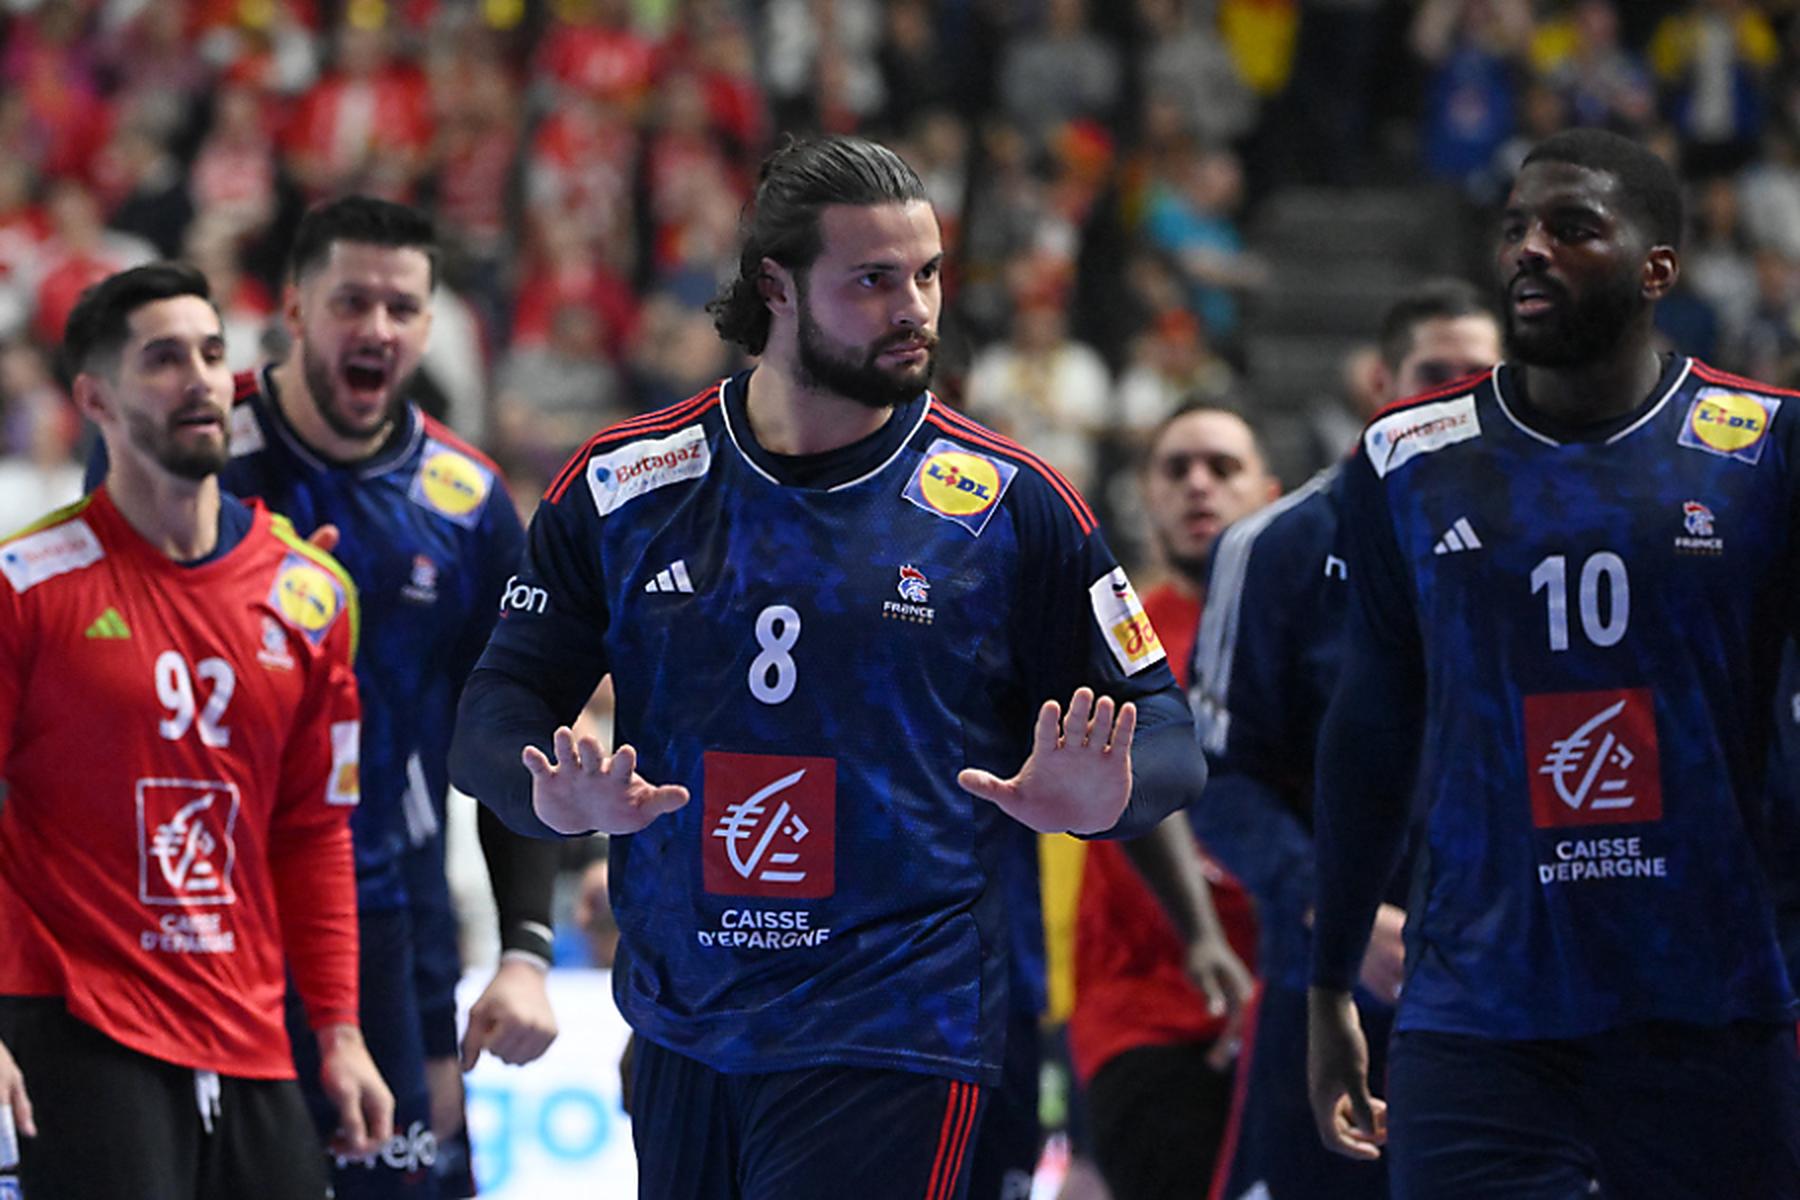 Köln | Frankreich bei Männer-Handball-EM im Finale